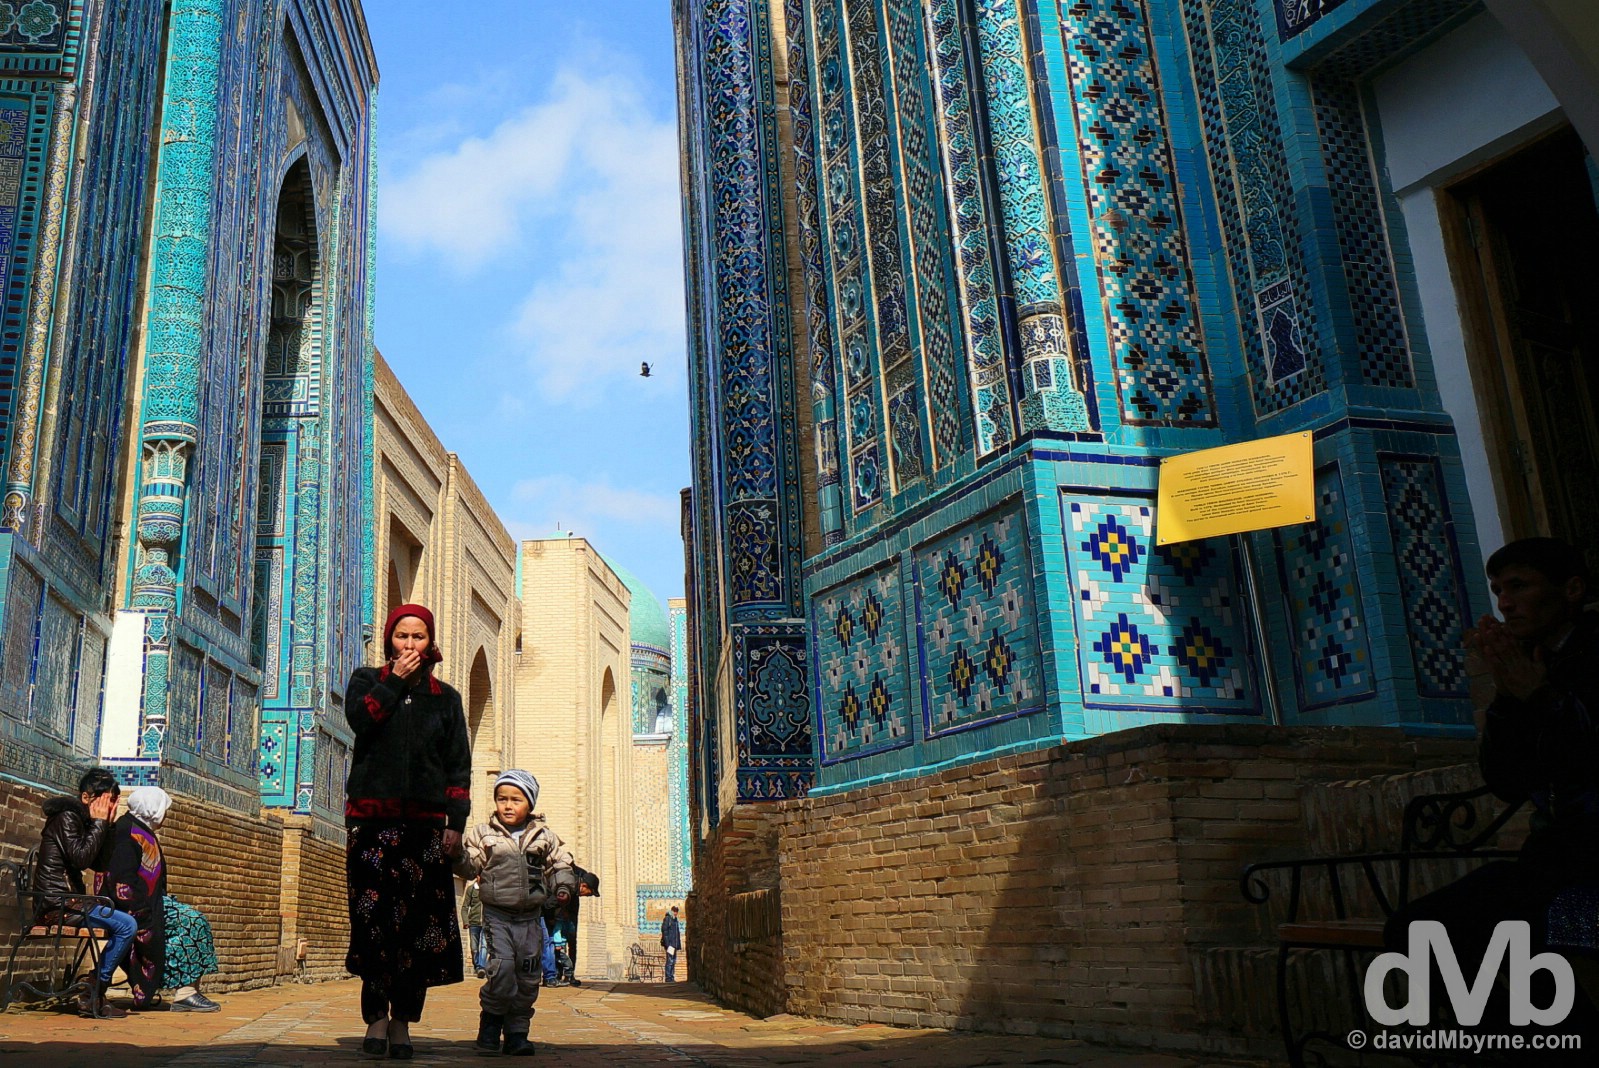 Walking through Shah-i-Zinda, the Avenue of Mausoleums, in Samarkand, Uzbekistan. March 8, 2015. 